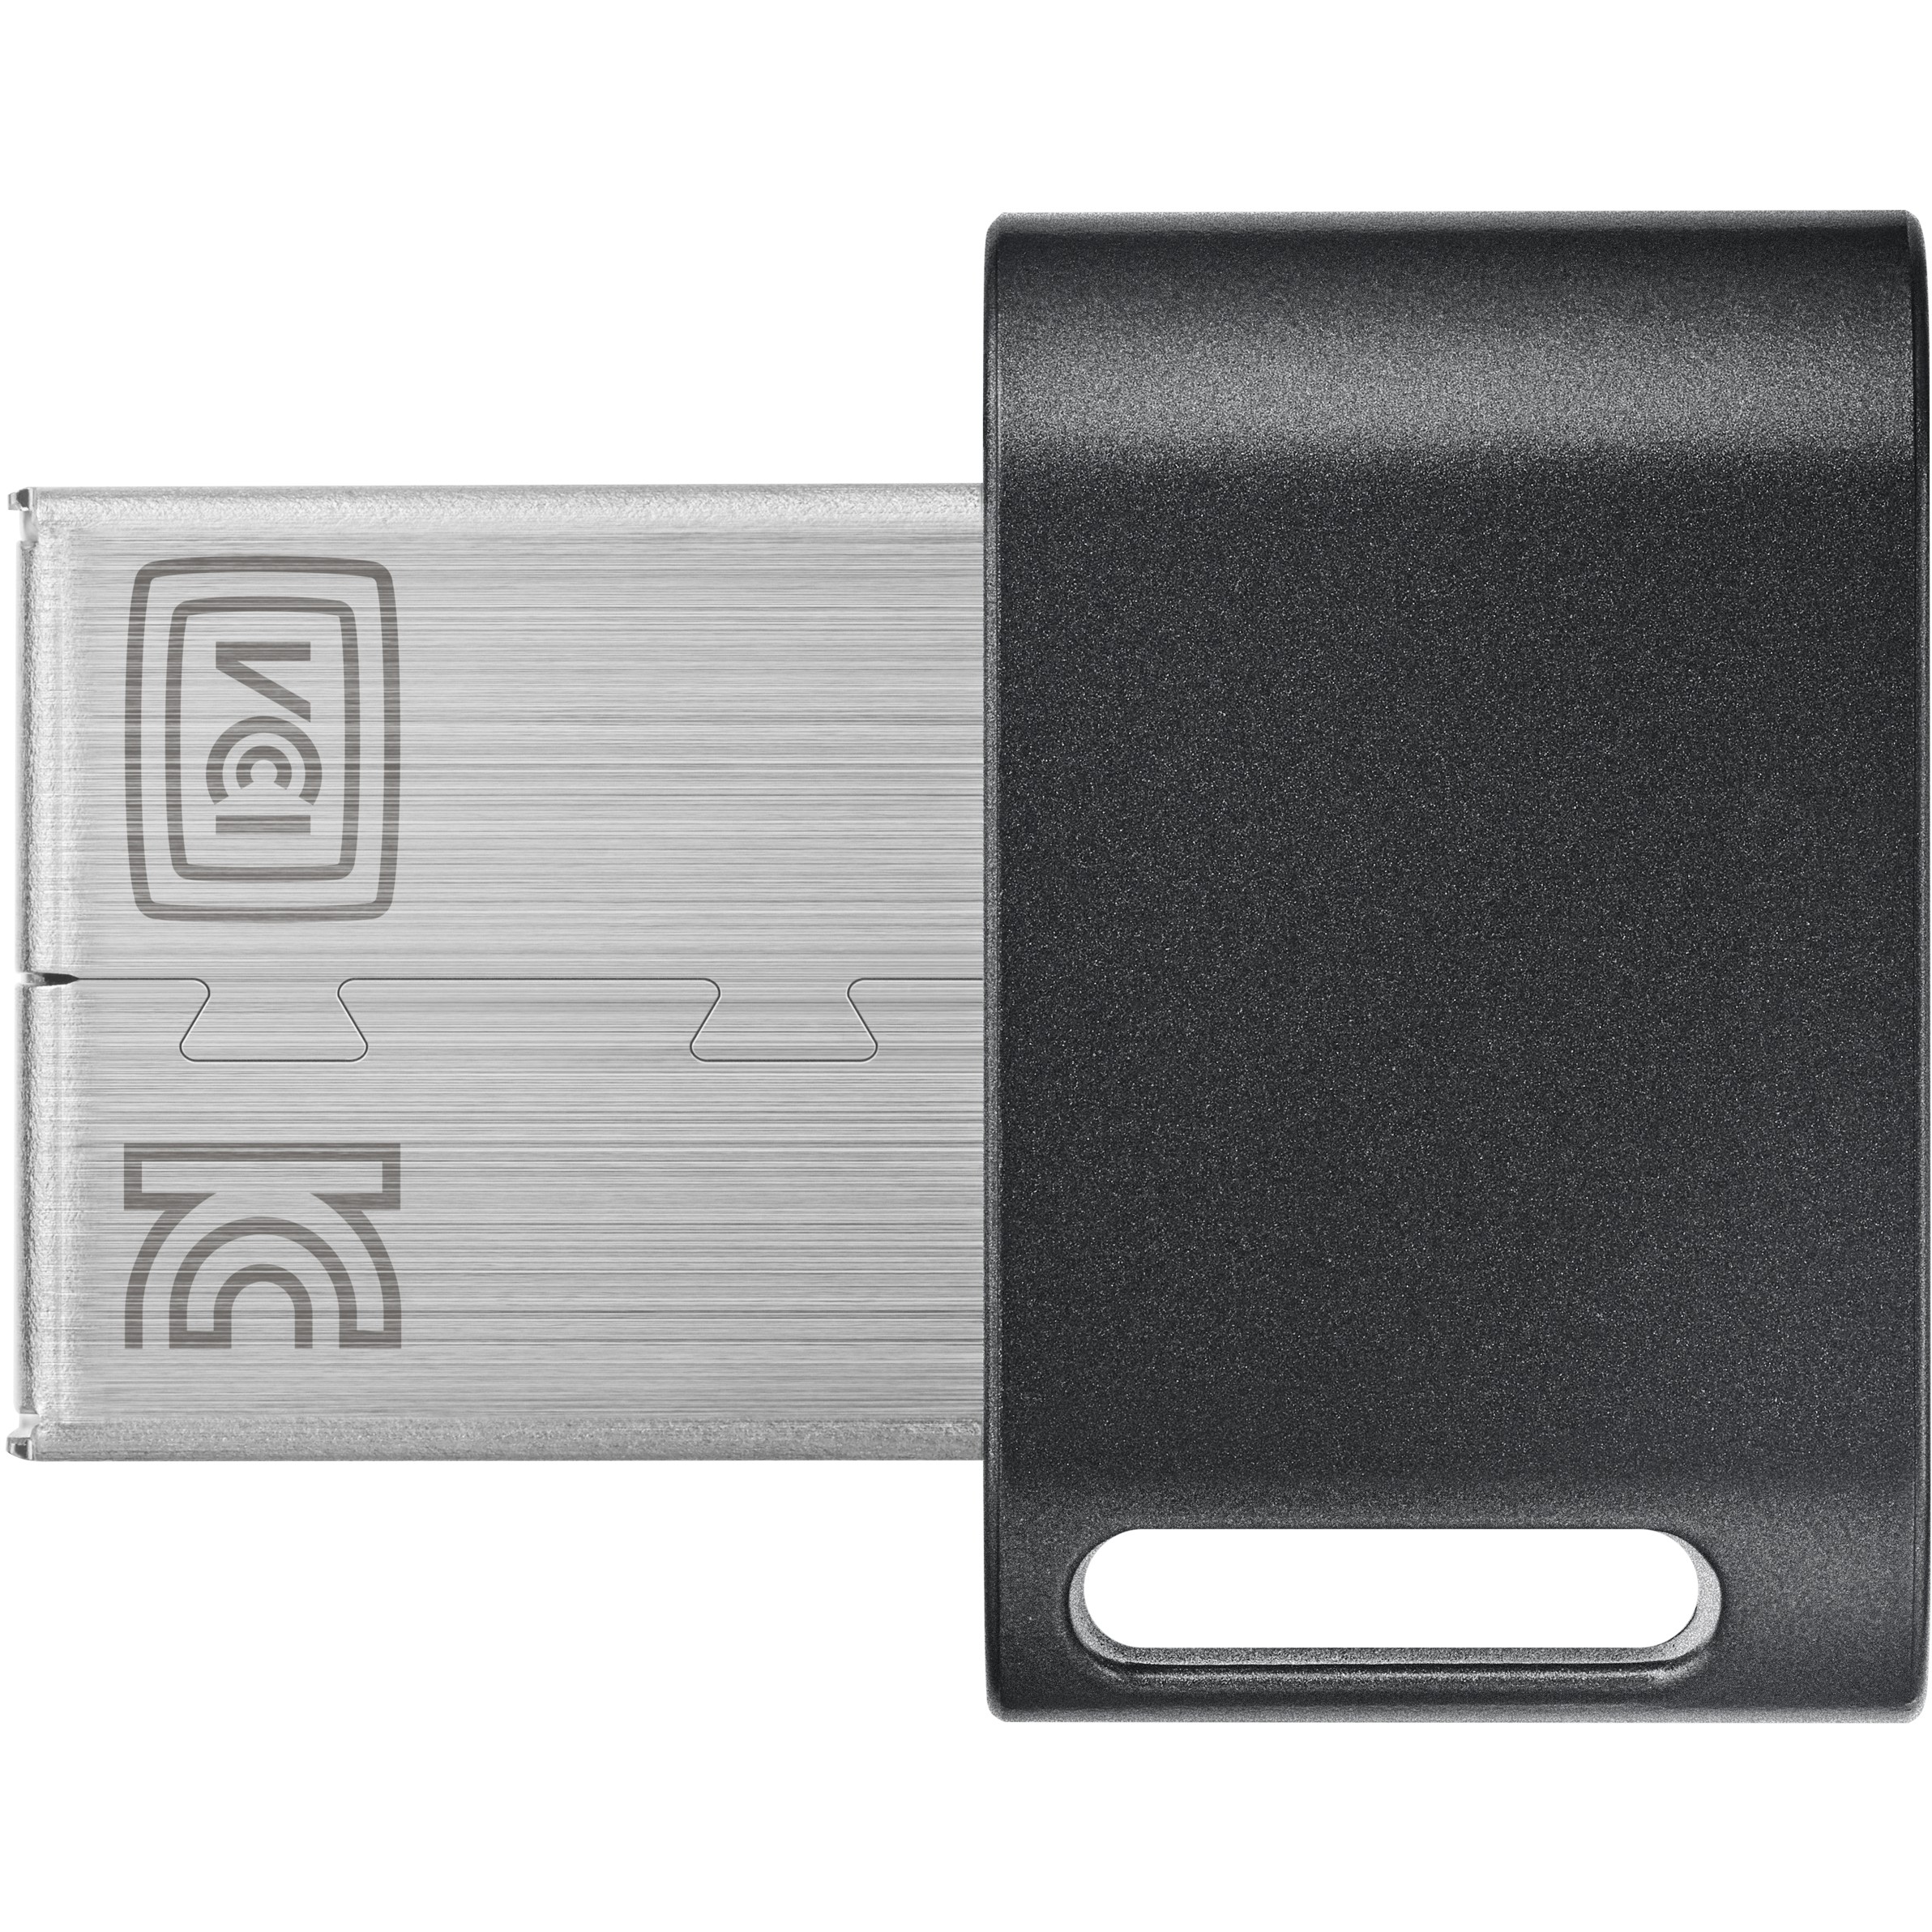 SAMSUNG MUF-128AB/APC, USB-Stick, Samsung MUF-128AB USB  (BILD2)